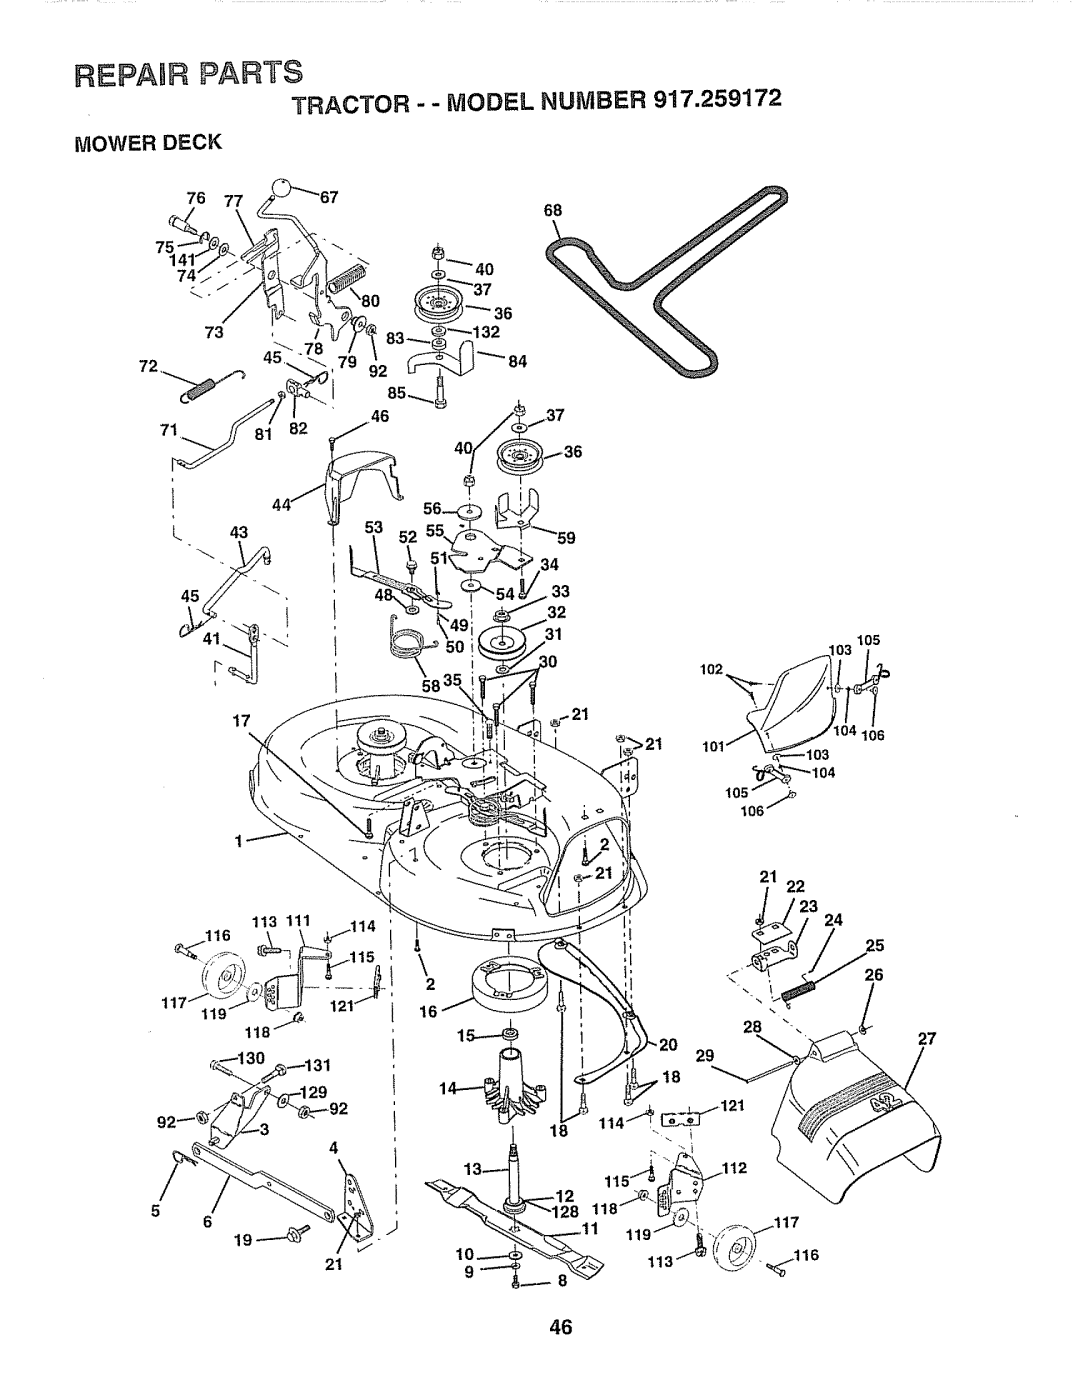 Craftsman 917.259172 manual REPAhR PARTS, Mower Deck, 68 52, 34 33 32, 27 18, TRACTOR - - MODEL NUMBER 917,259172 